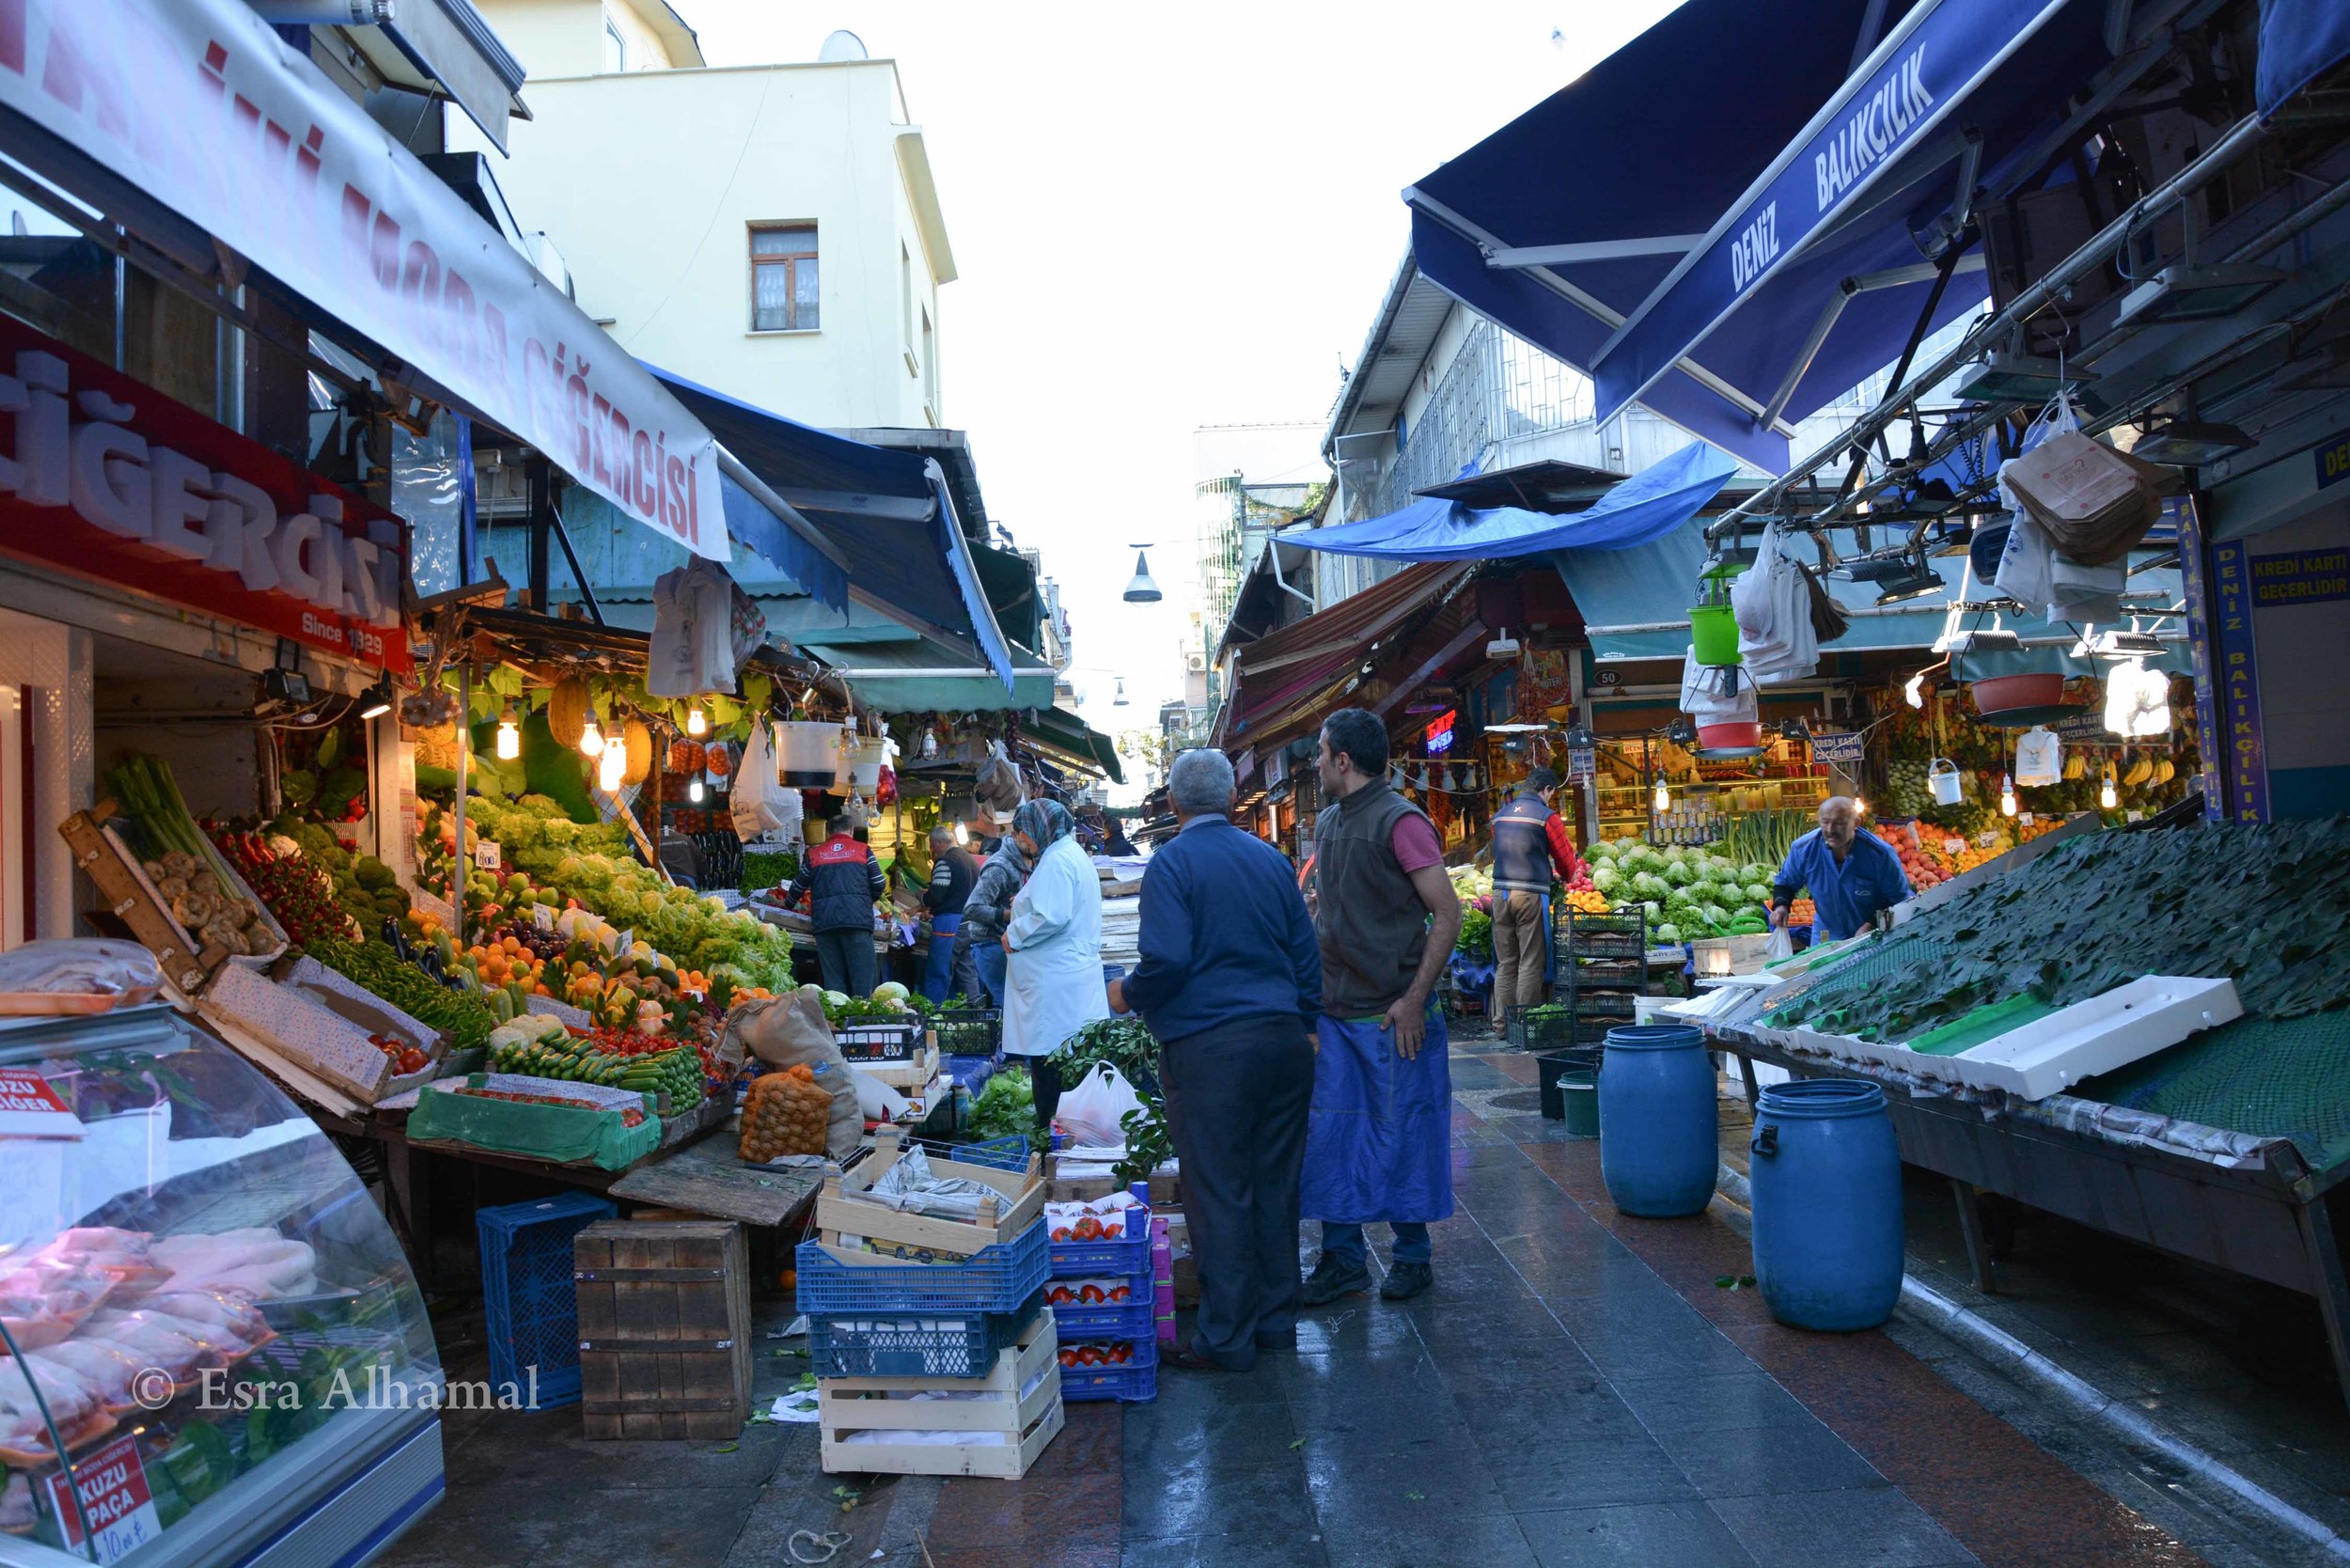 Shopping in Kadıköy